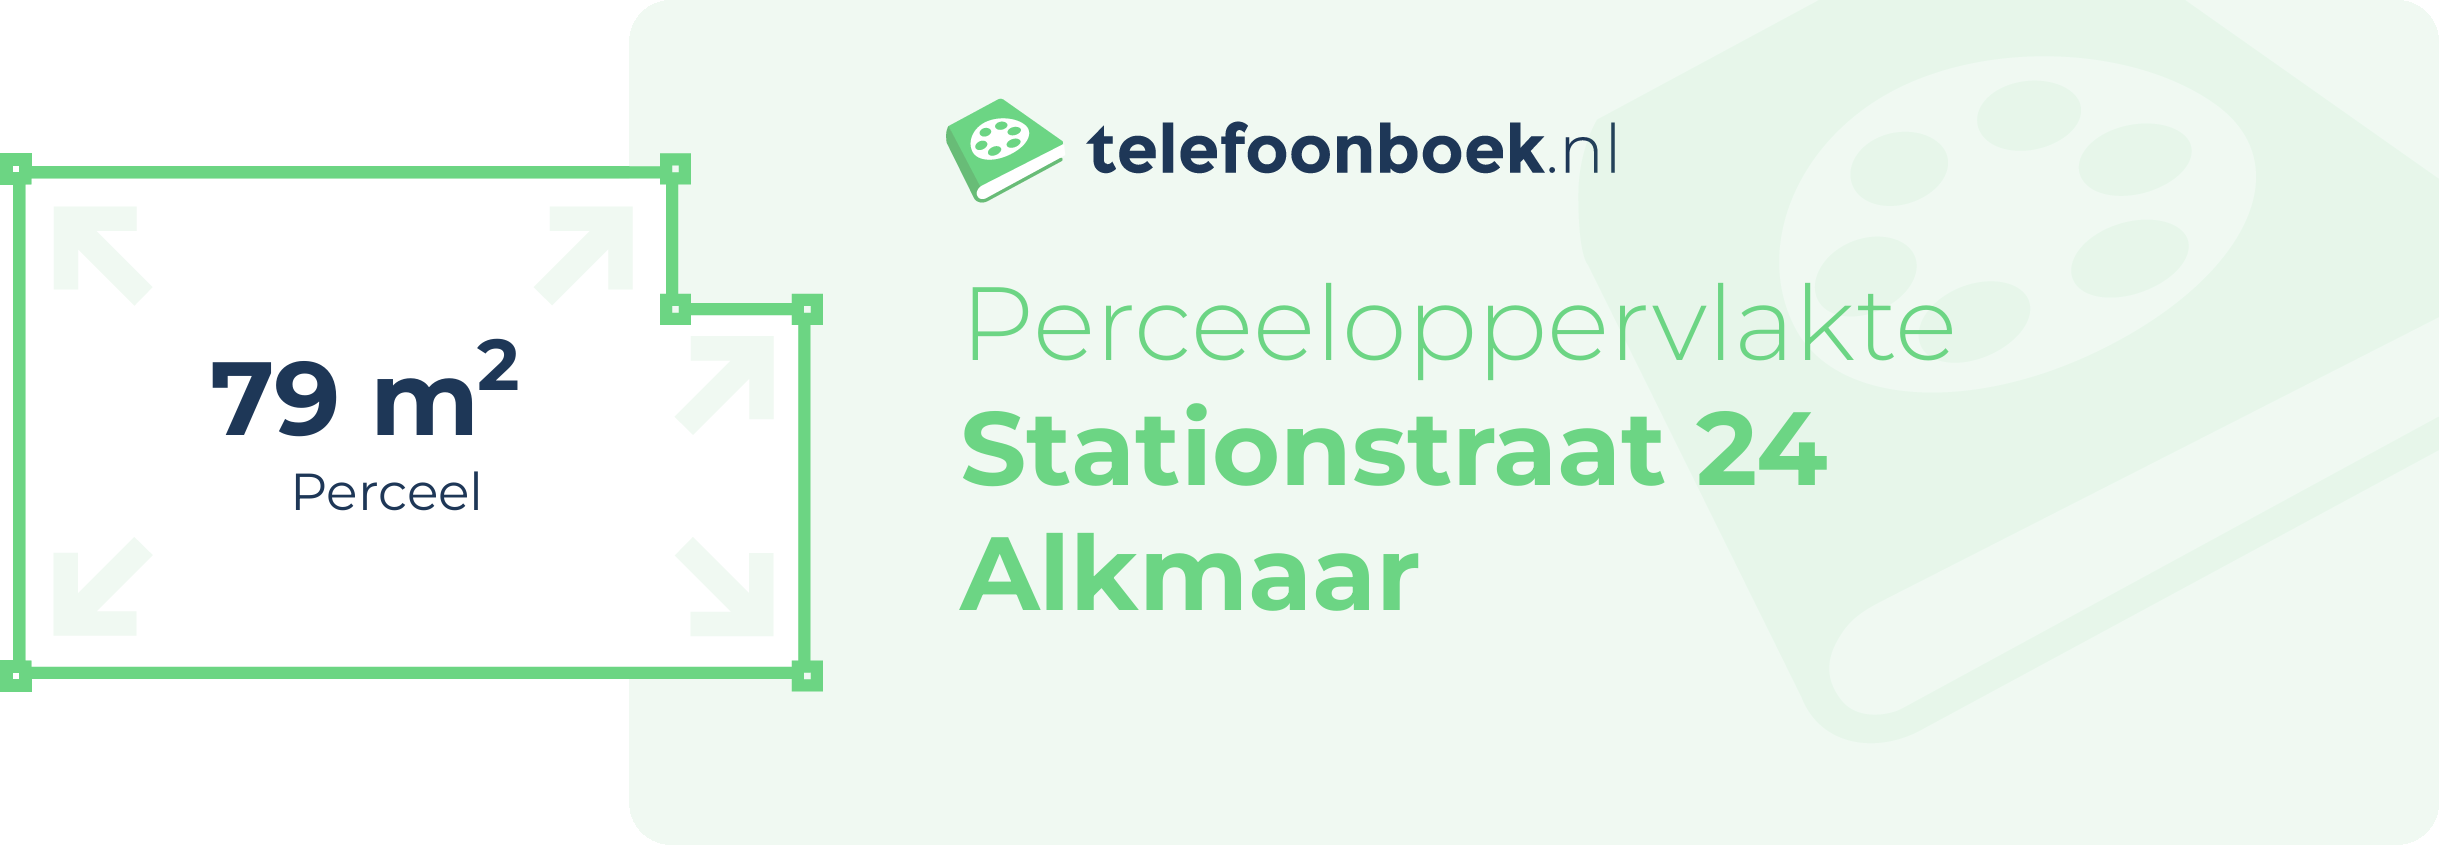 Perceeloppervlakte Stationstraat 24 Alkmaar